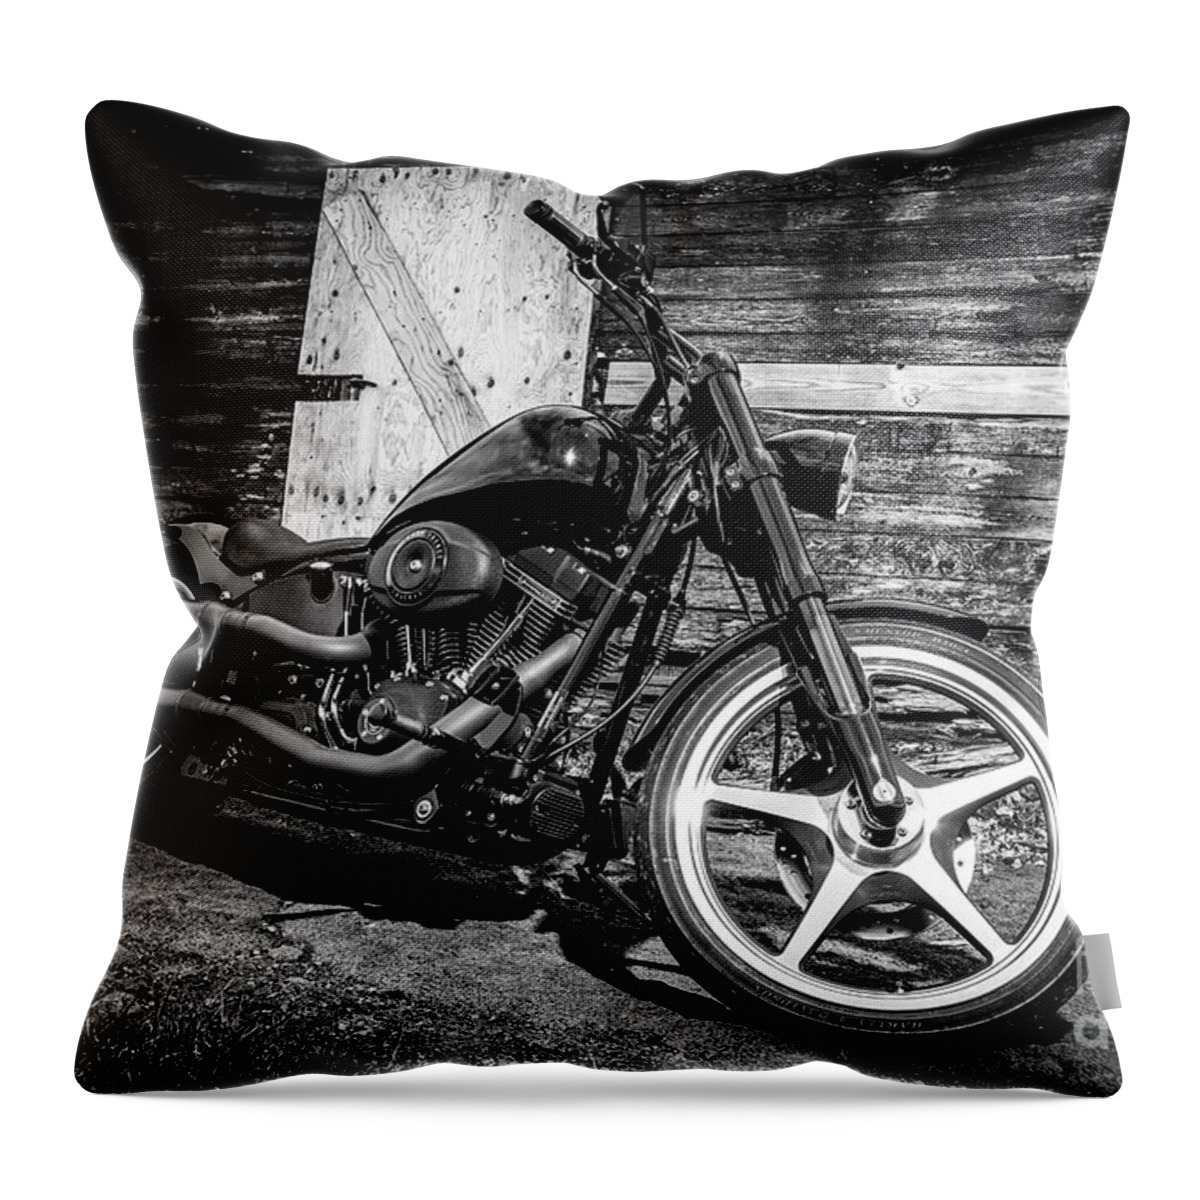 Harley Davidson Throw Pillow featuring the photograph Harley Davidson Softail night train by Gunnar Orn Arnason